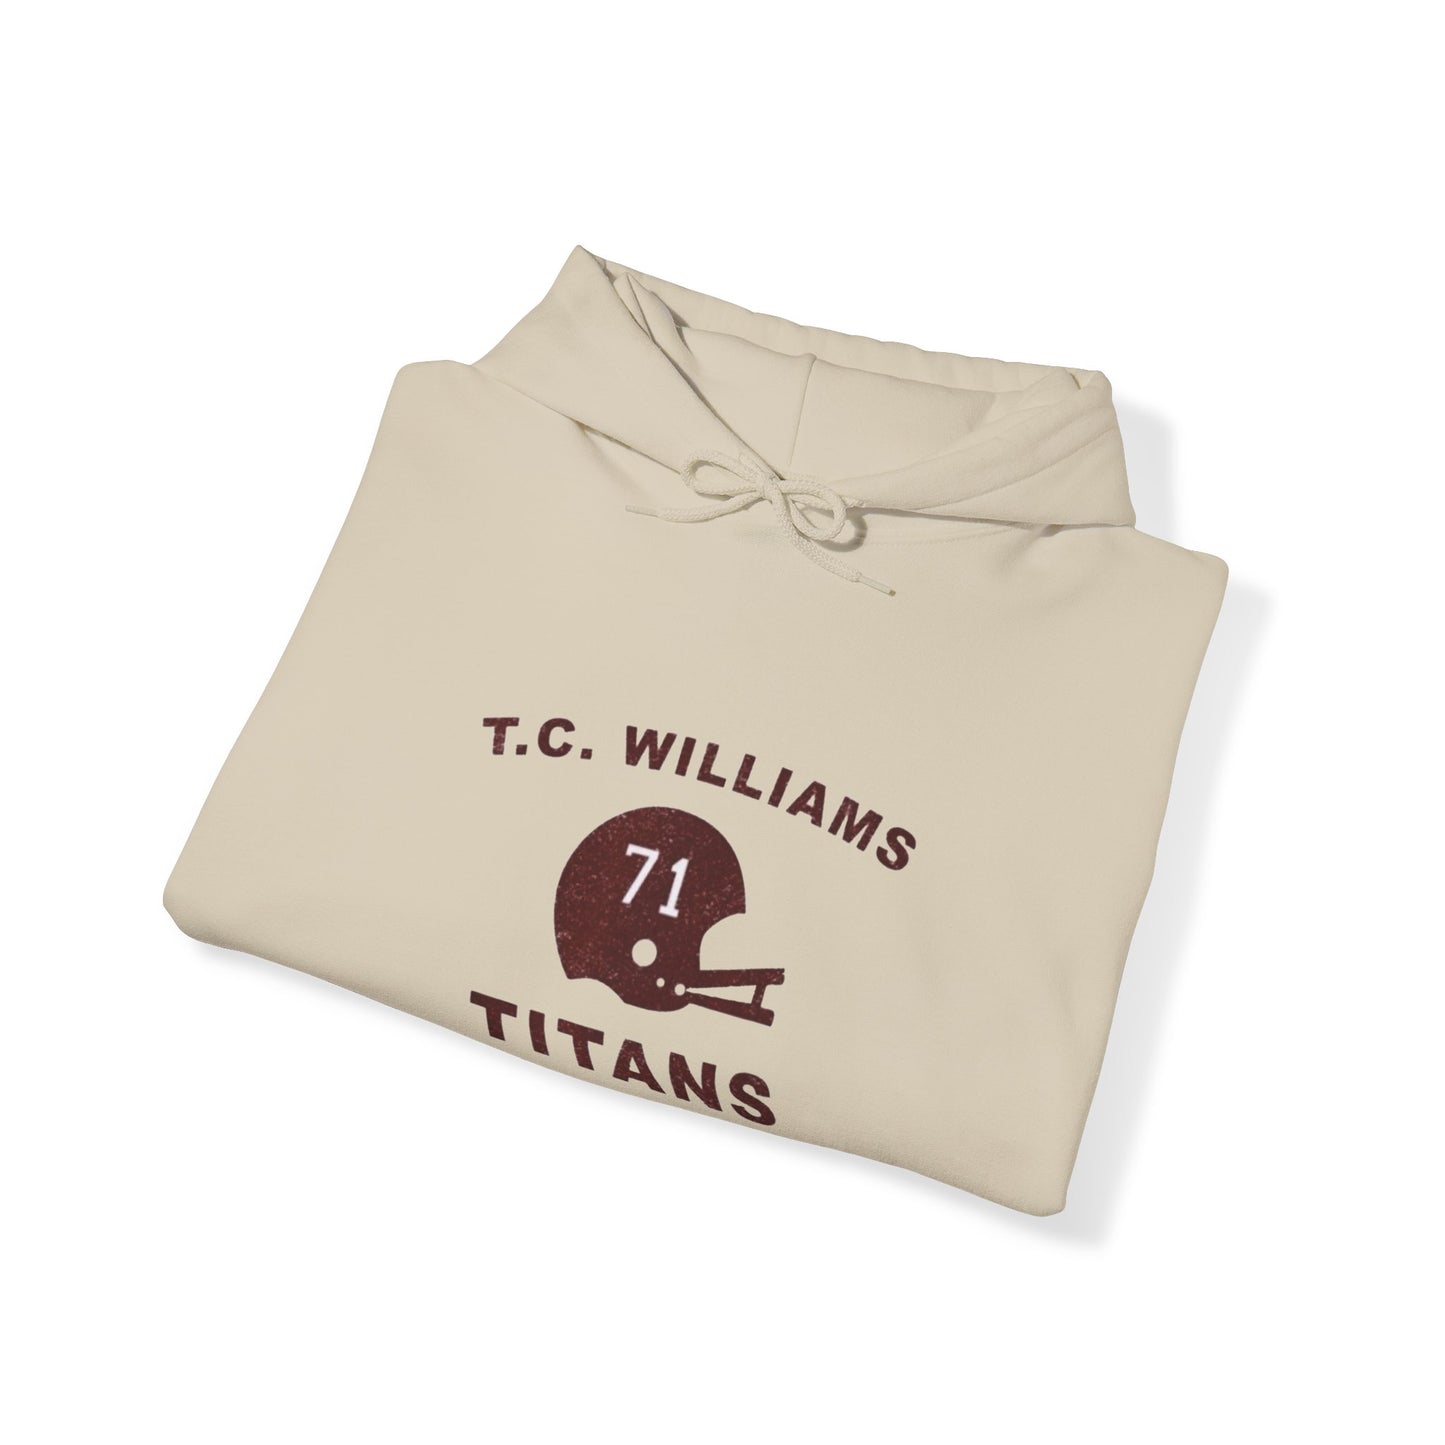 JJ Watt TC Williams Titans Limited Release Unisex Heavy Blend Hooded Sweatshirt